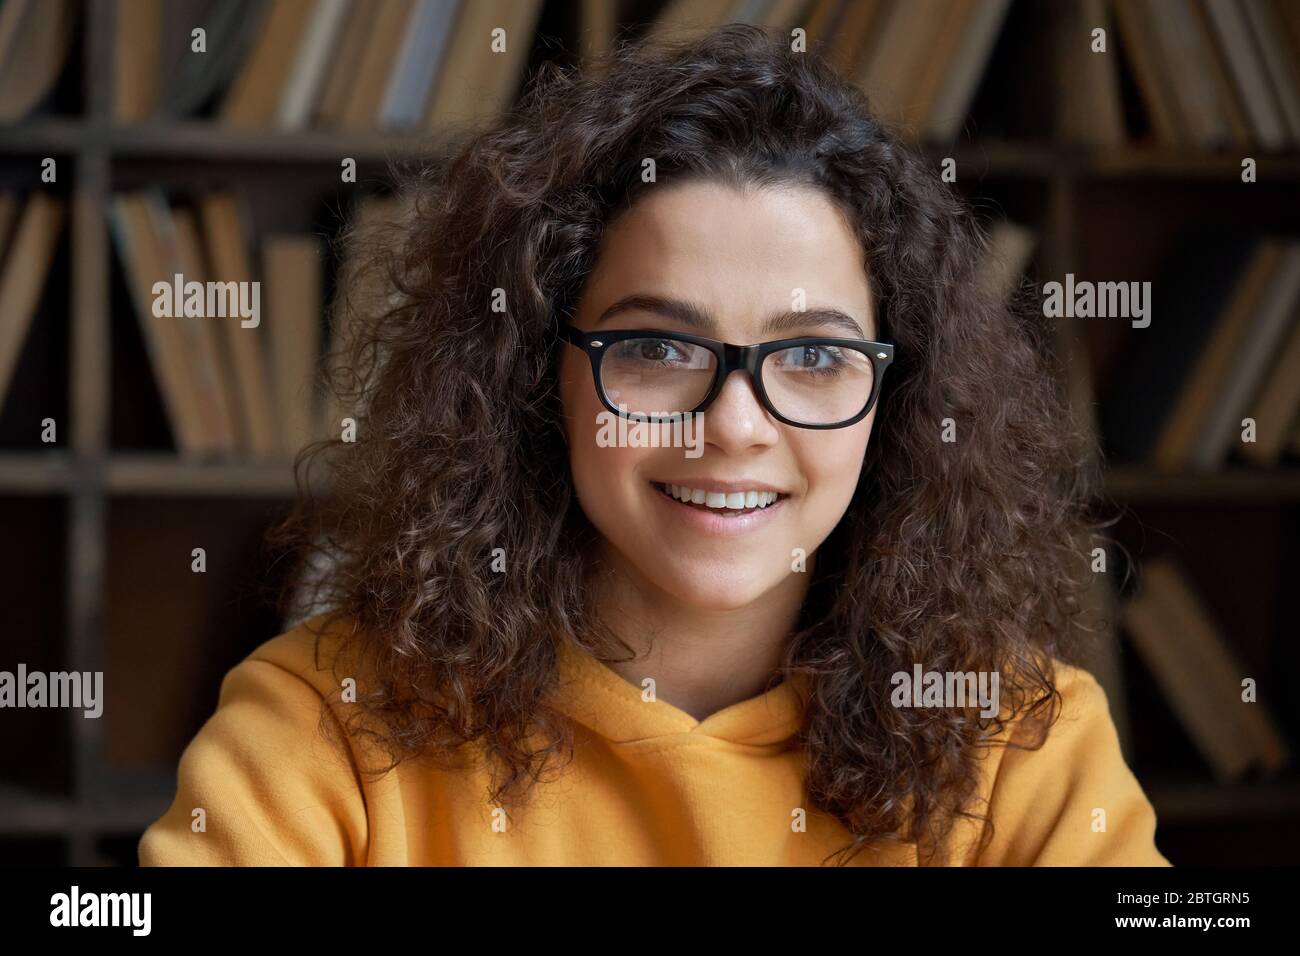 Smiling latin teen girl school student wear glasses looking at camera, headshot. Stock Photo